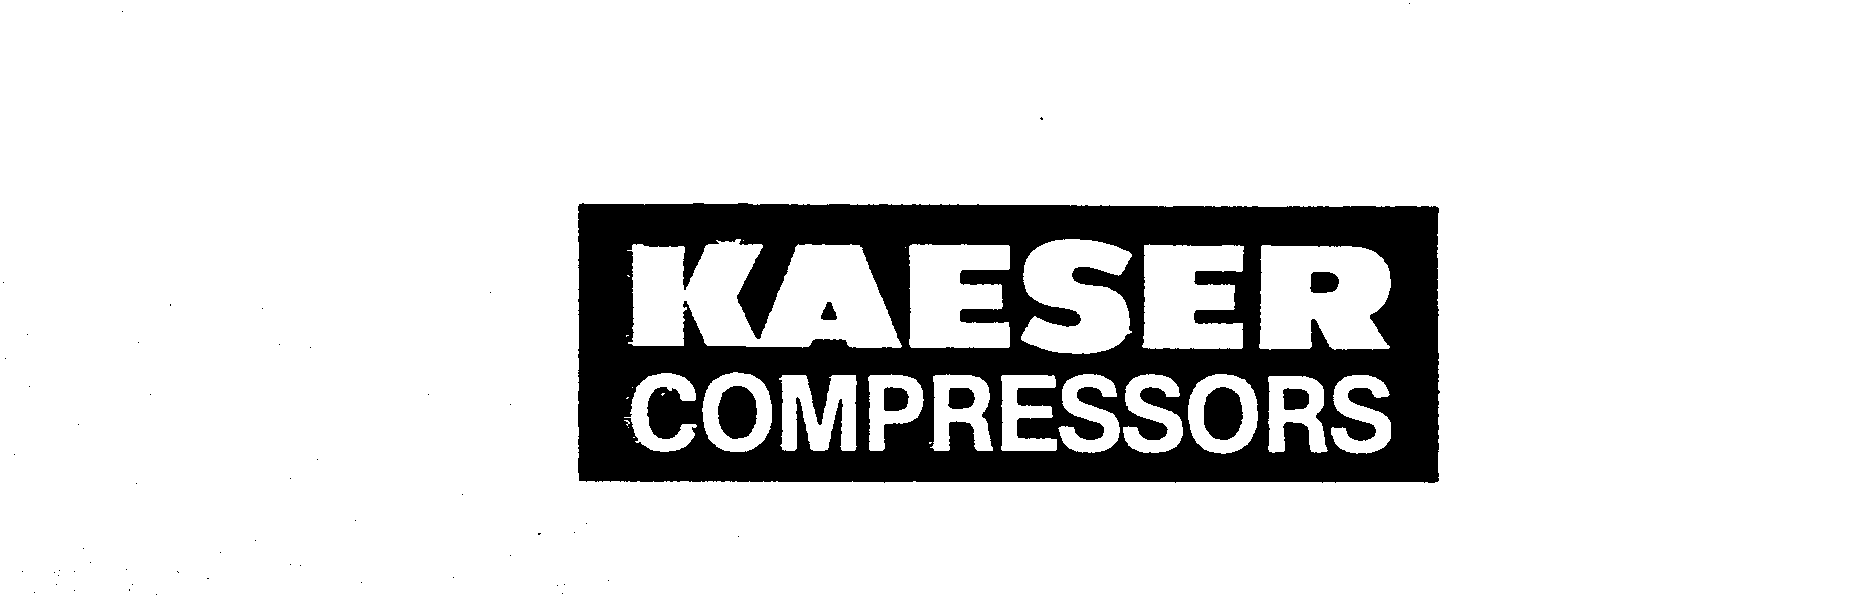  KAESER COMPRESSORS